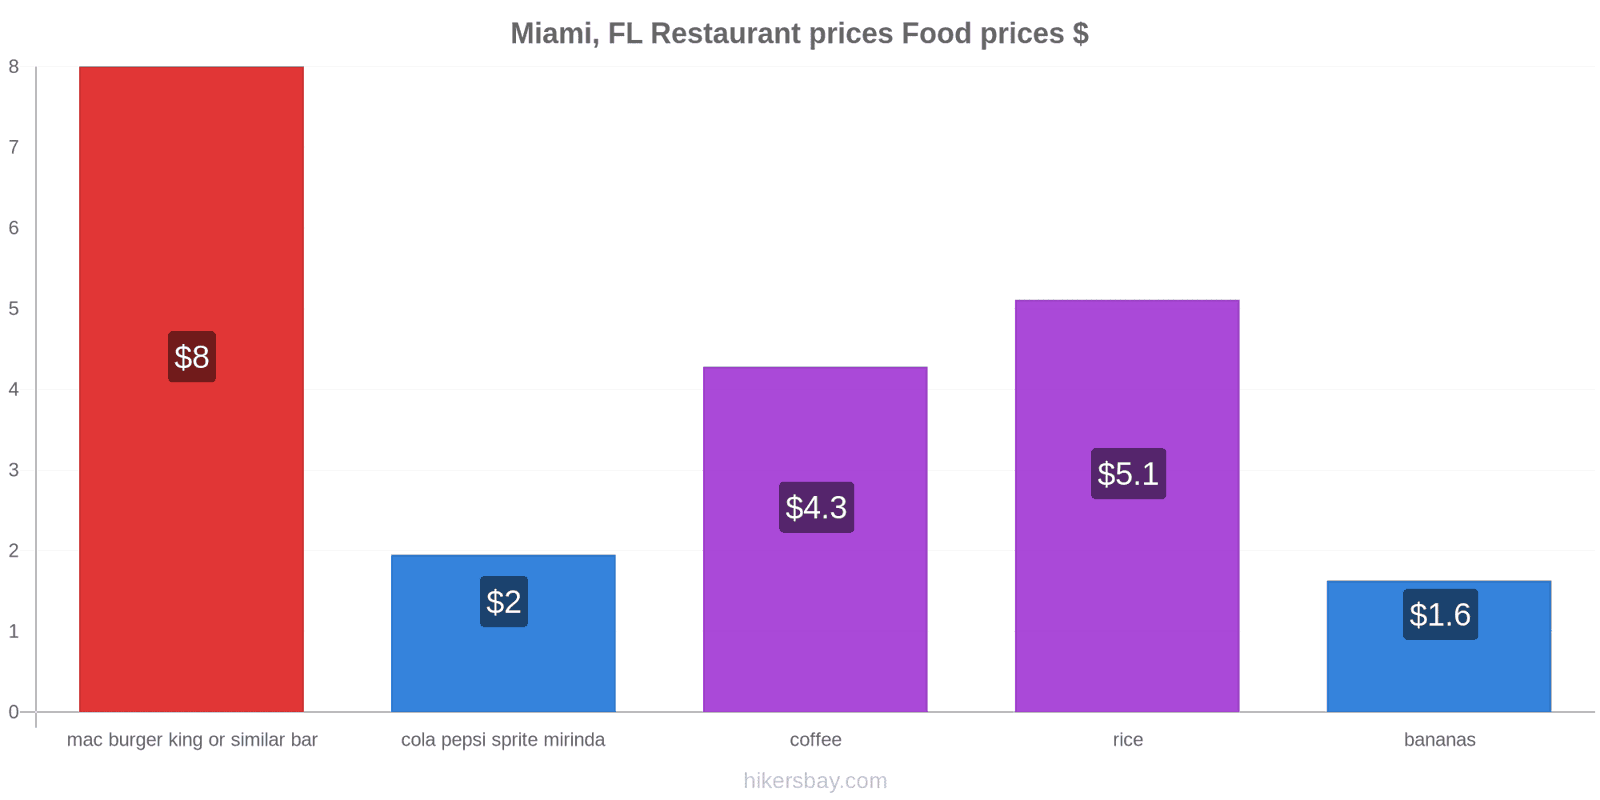 Miami, FL price changes hikersbay.com